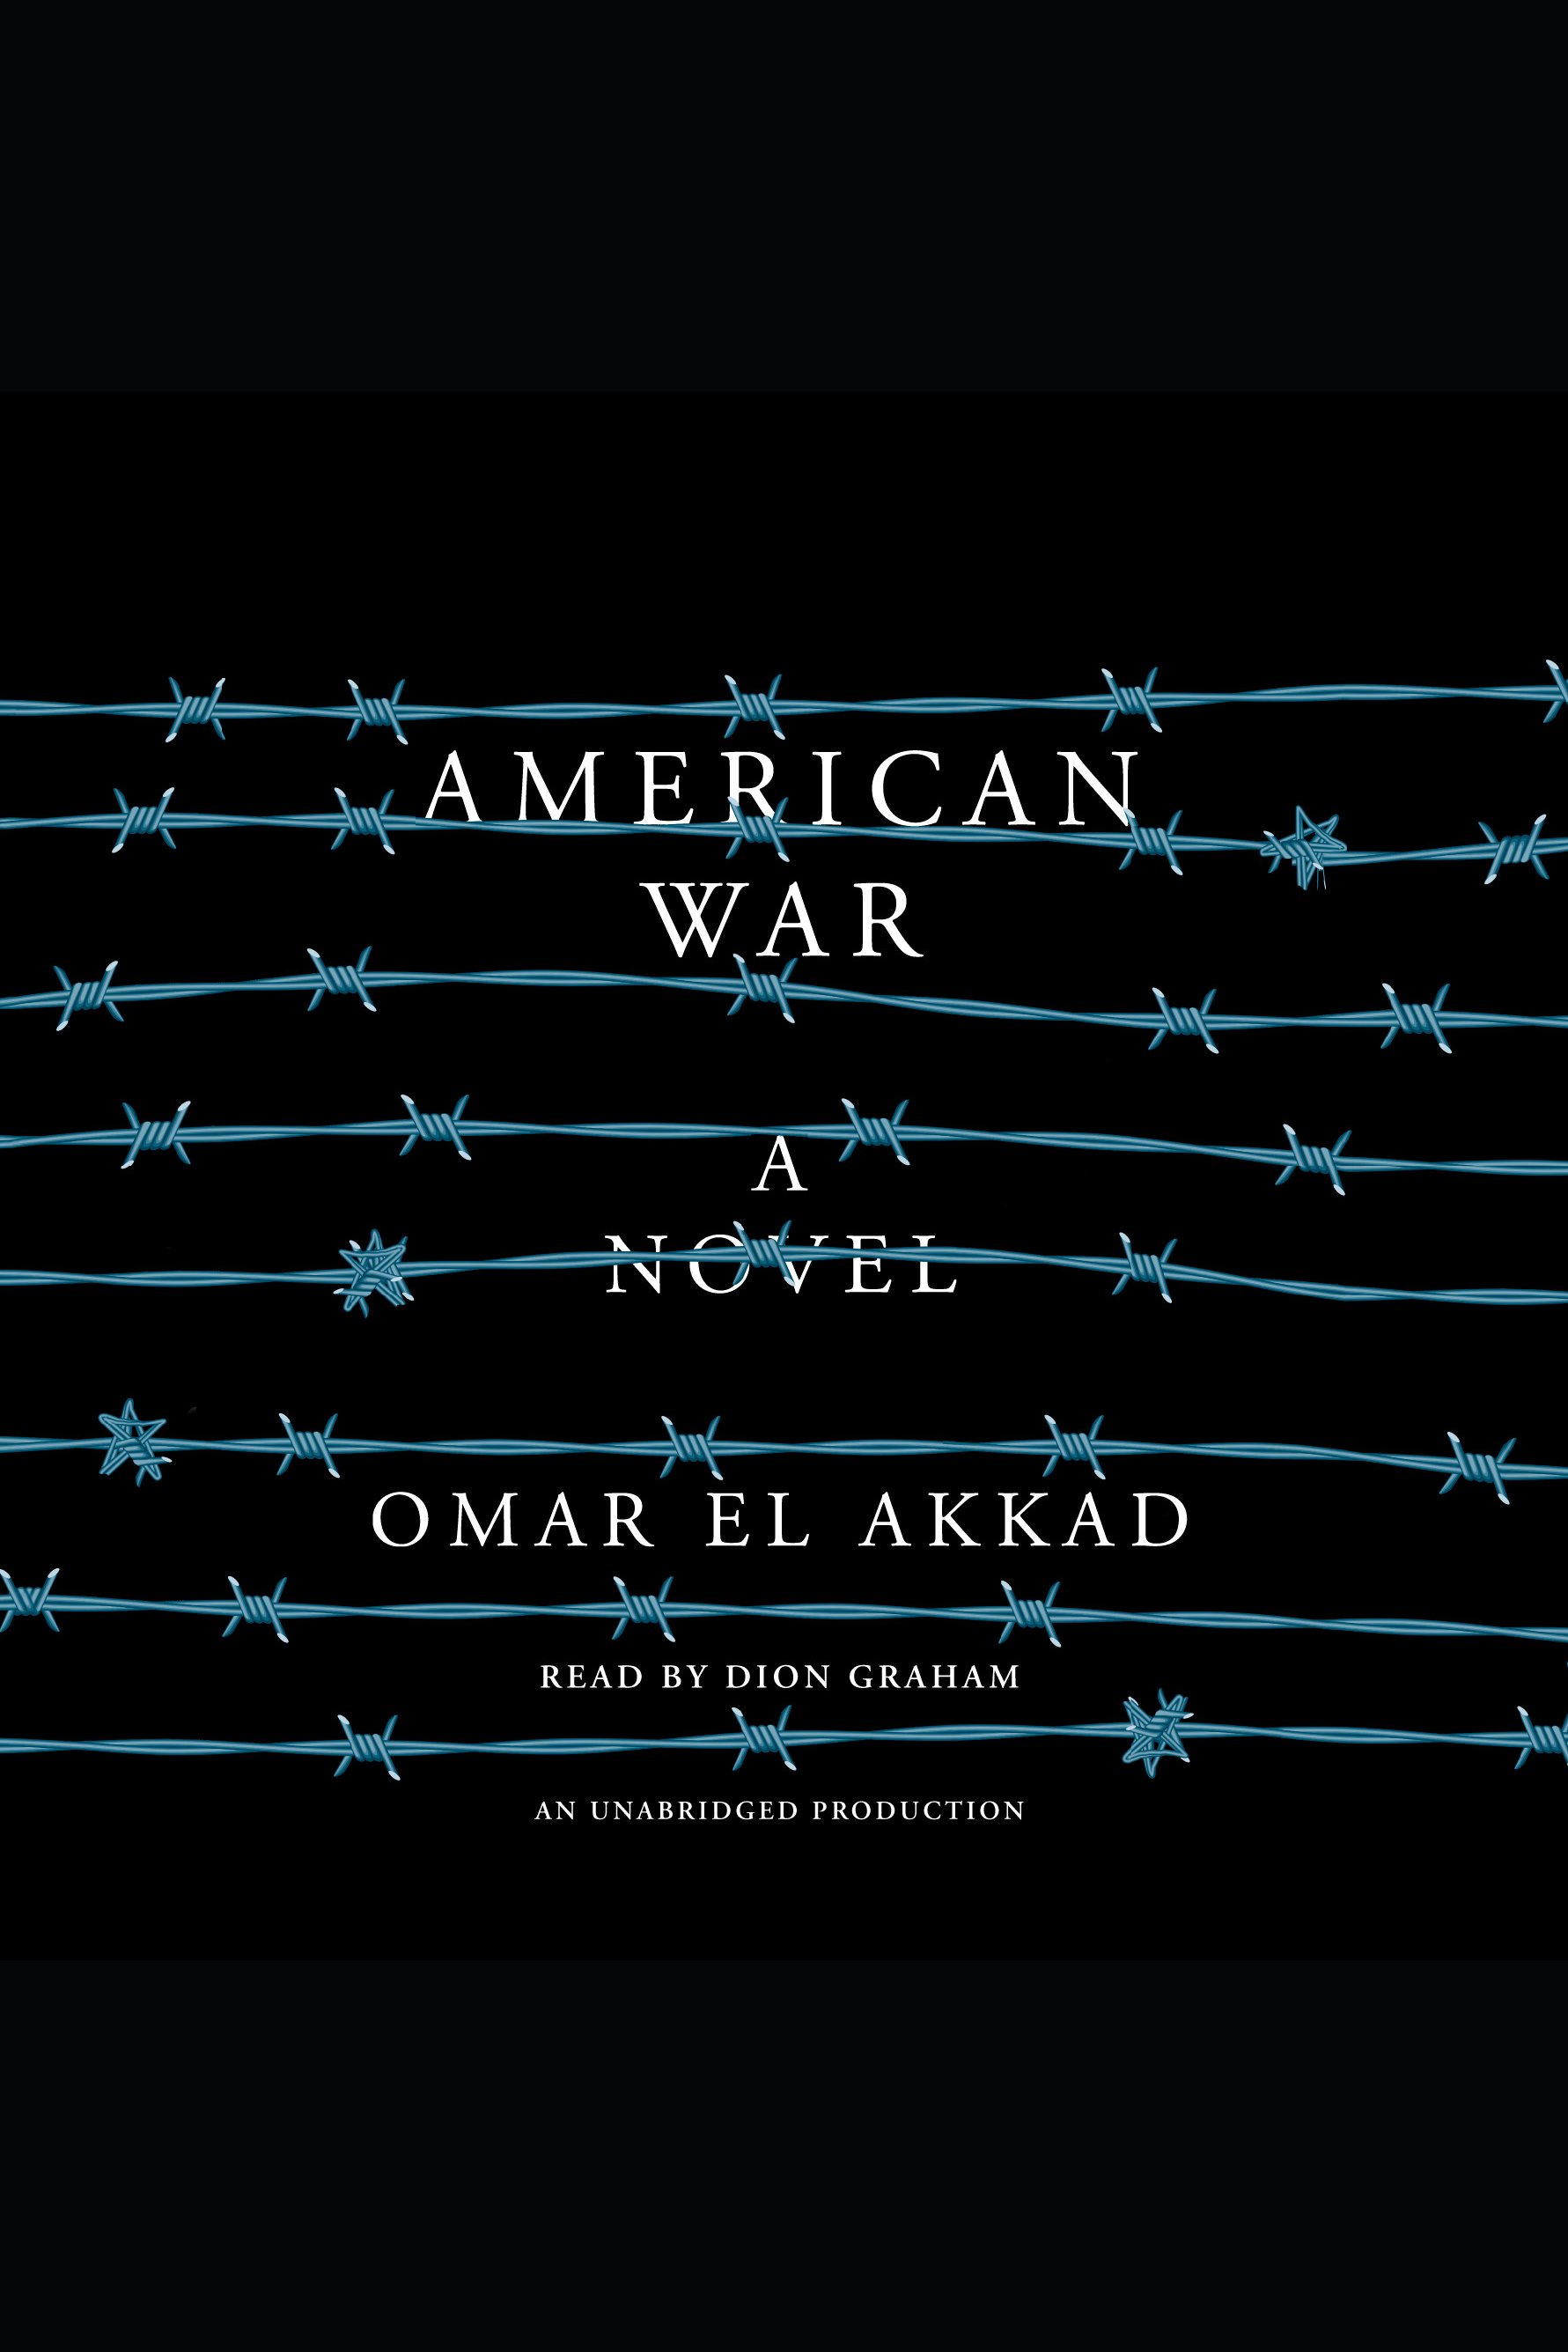 American War cover image